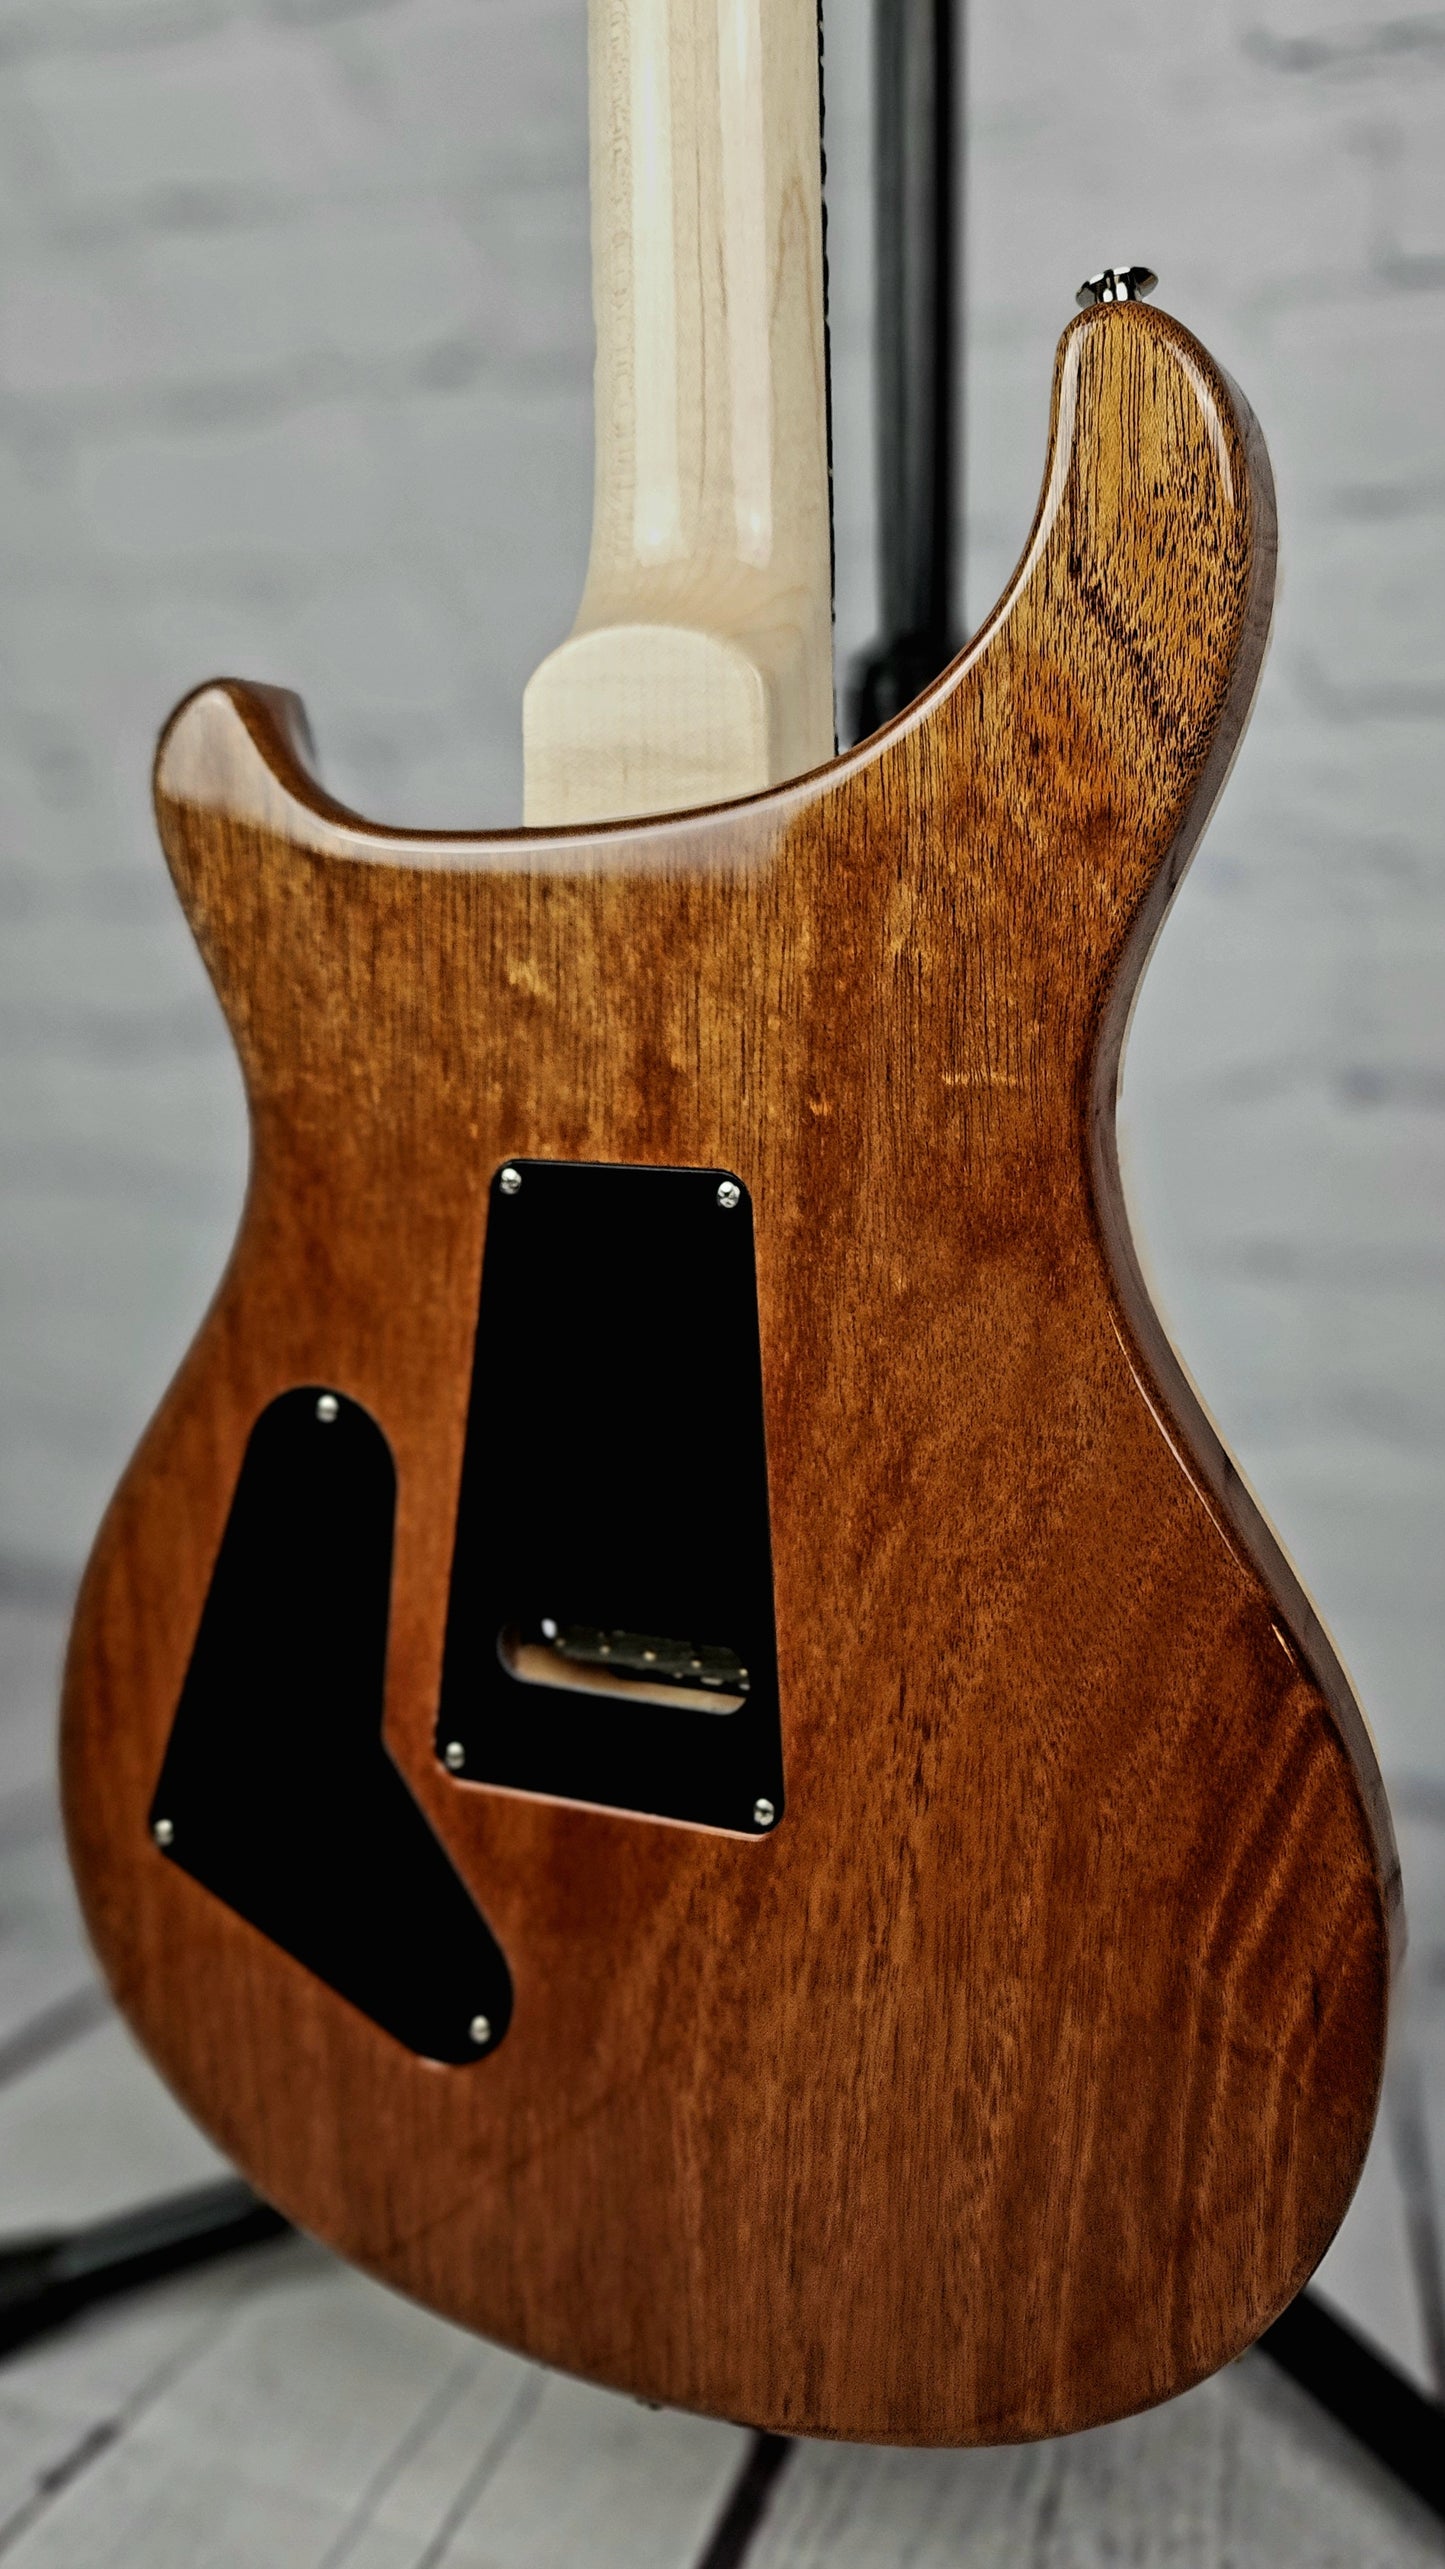 Paul Reed Smith PRS Custom 24 Floyd Core Electric Guitar Purple Iris